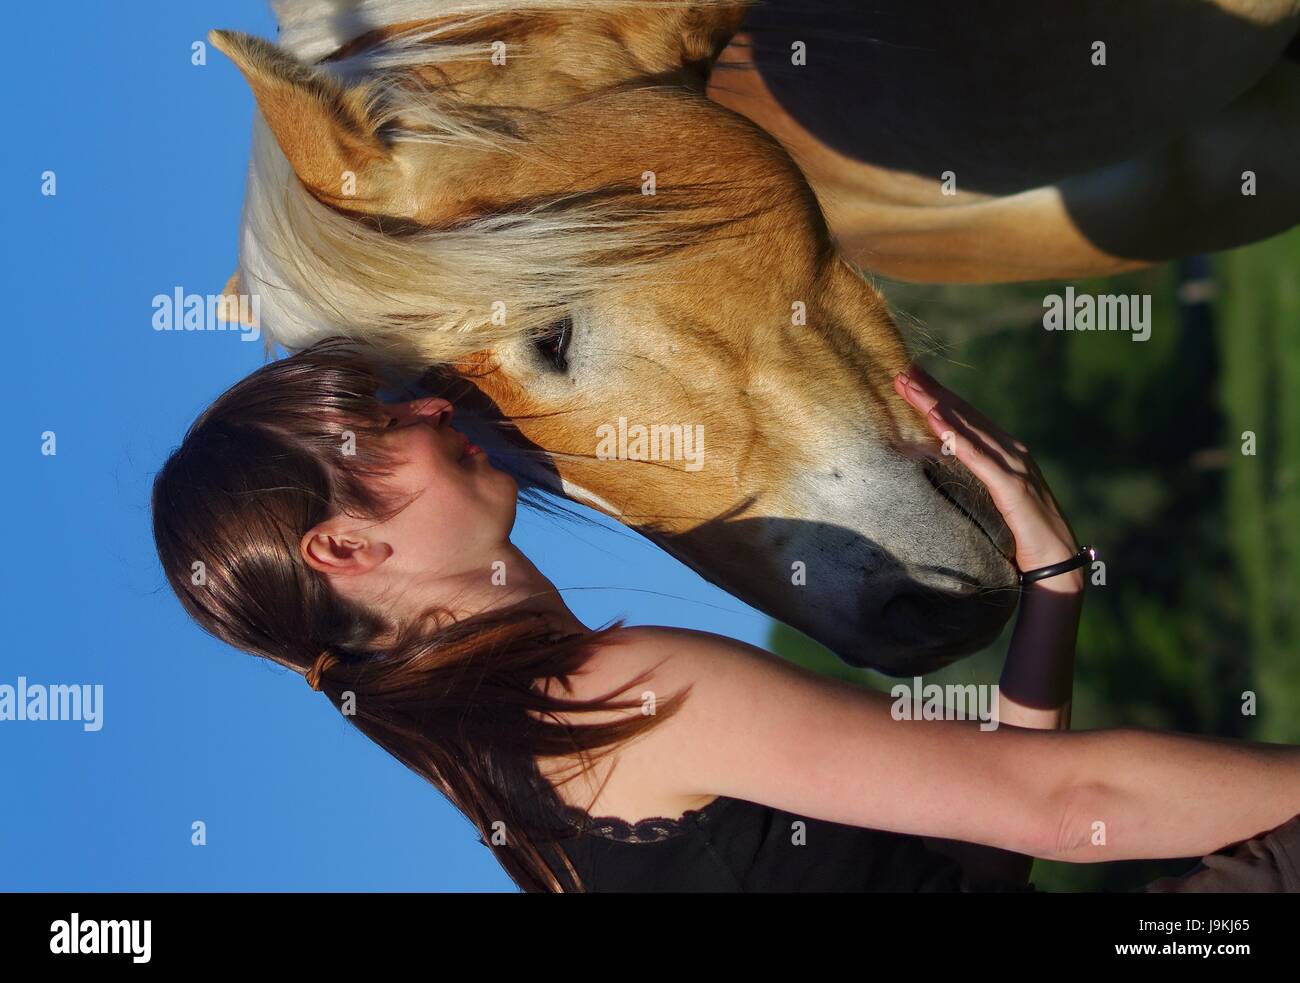 woman, friendship, sport, sports, ride, horse, stallion, love of animals, Stock Photo